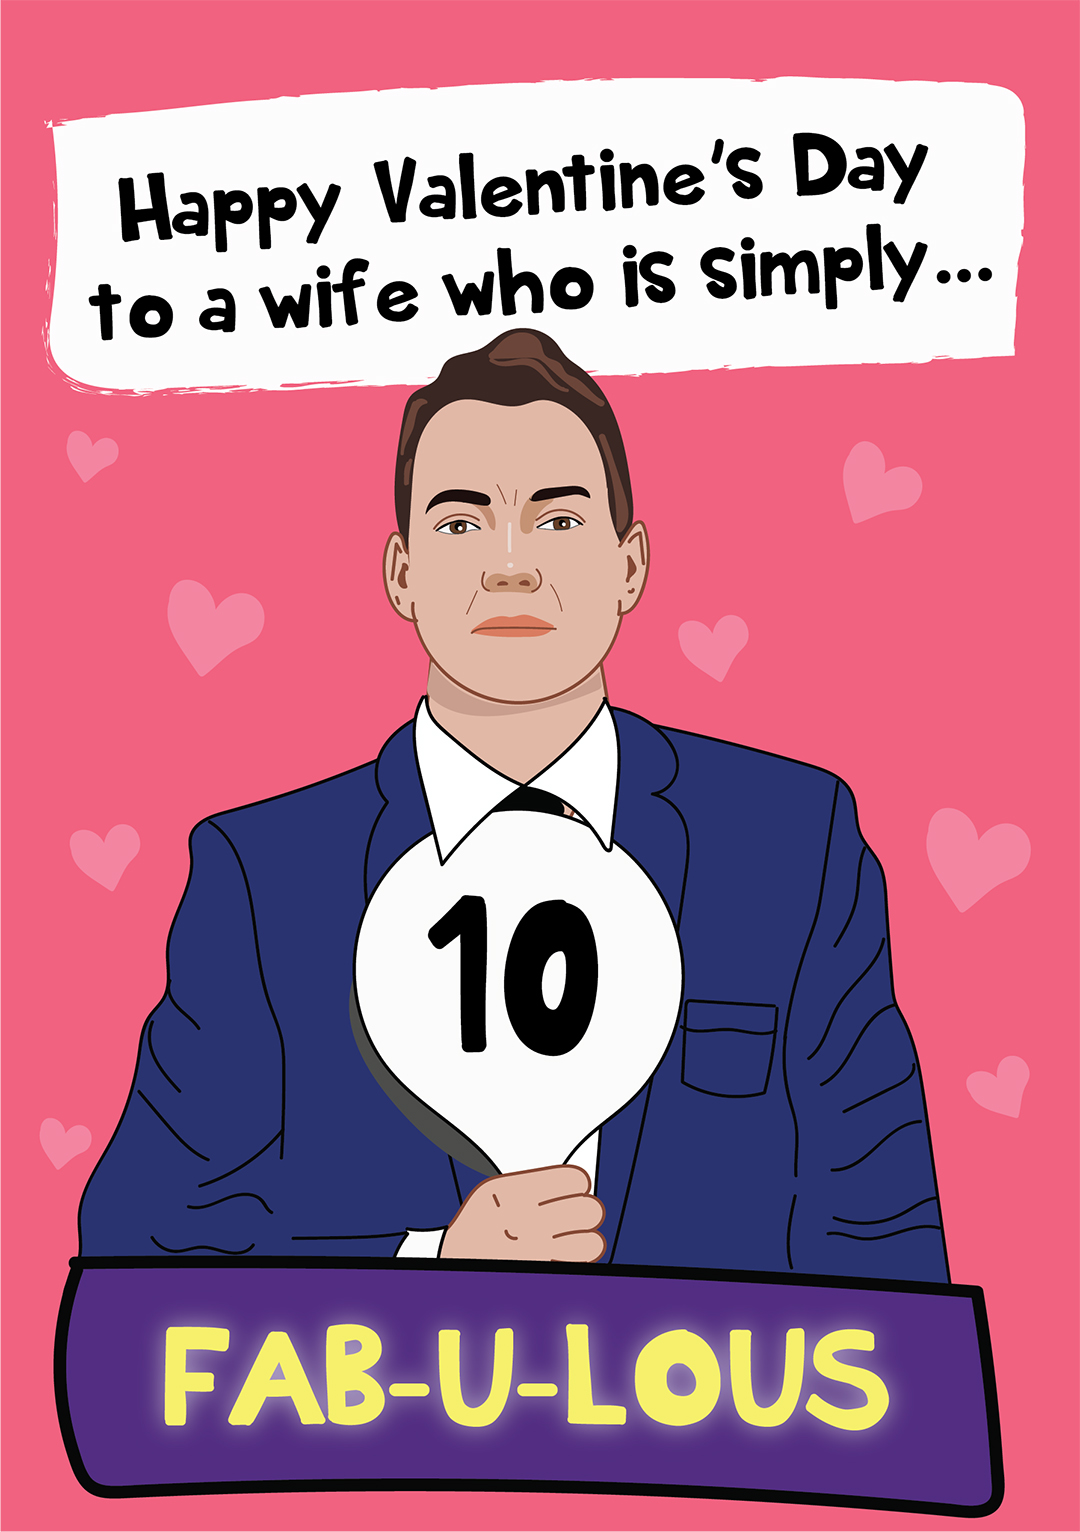 Fab-u-lous Wife 10/10 Valentine's Day Card